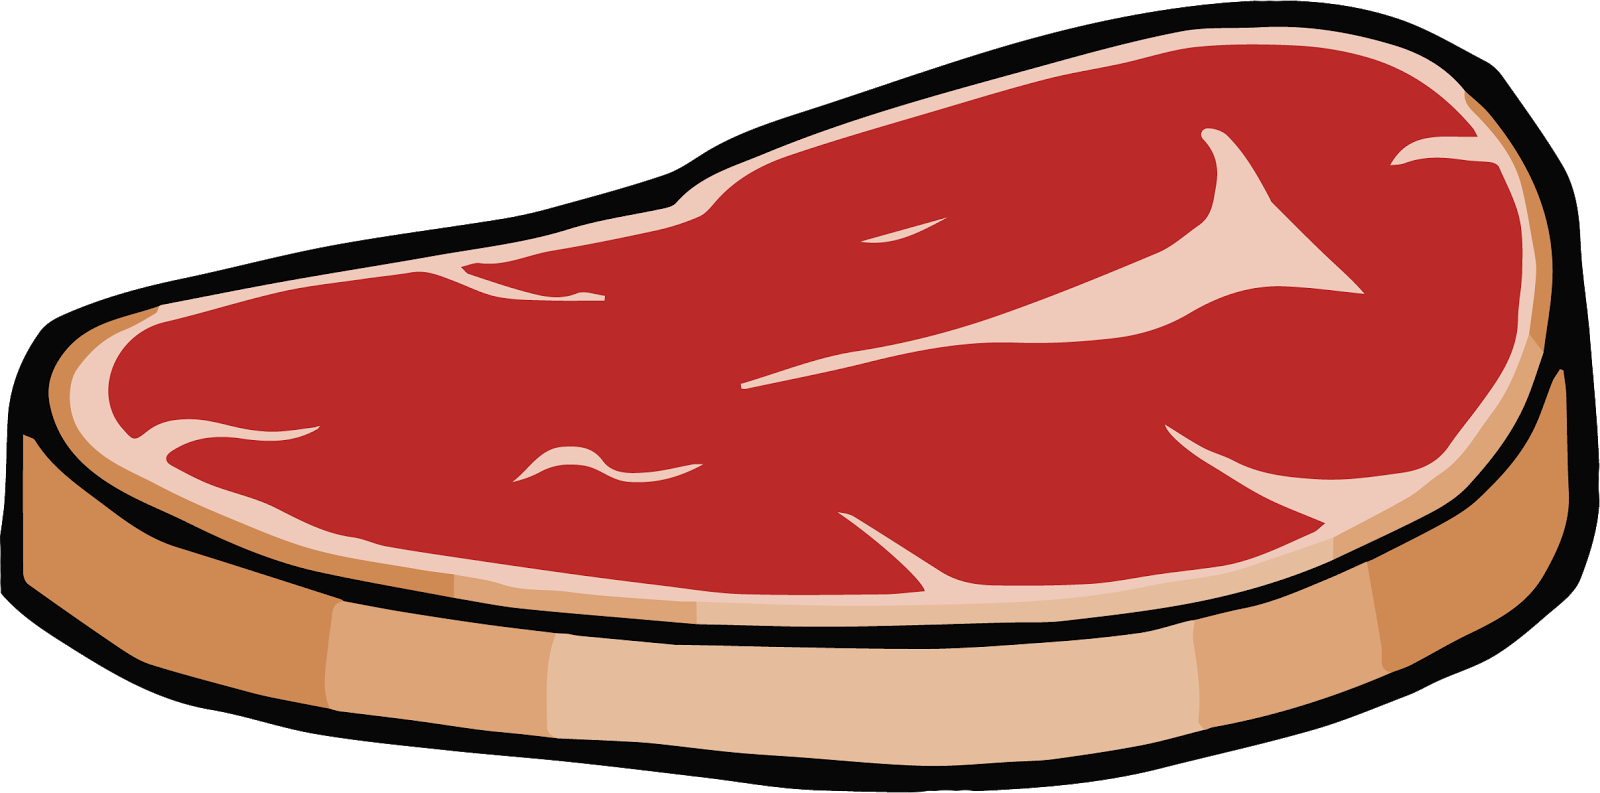 Free Cartoon Steak Cliparts, Download Free Cartoon Steak Cliparts png